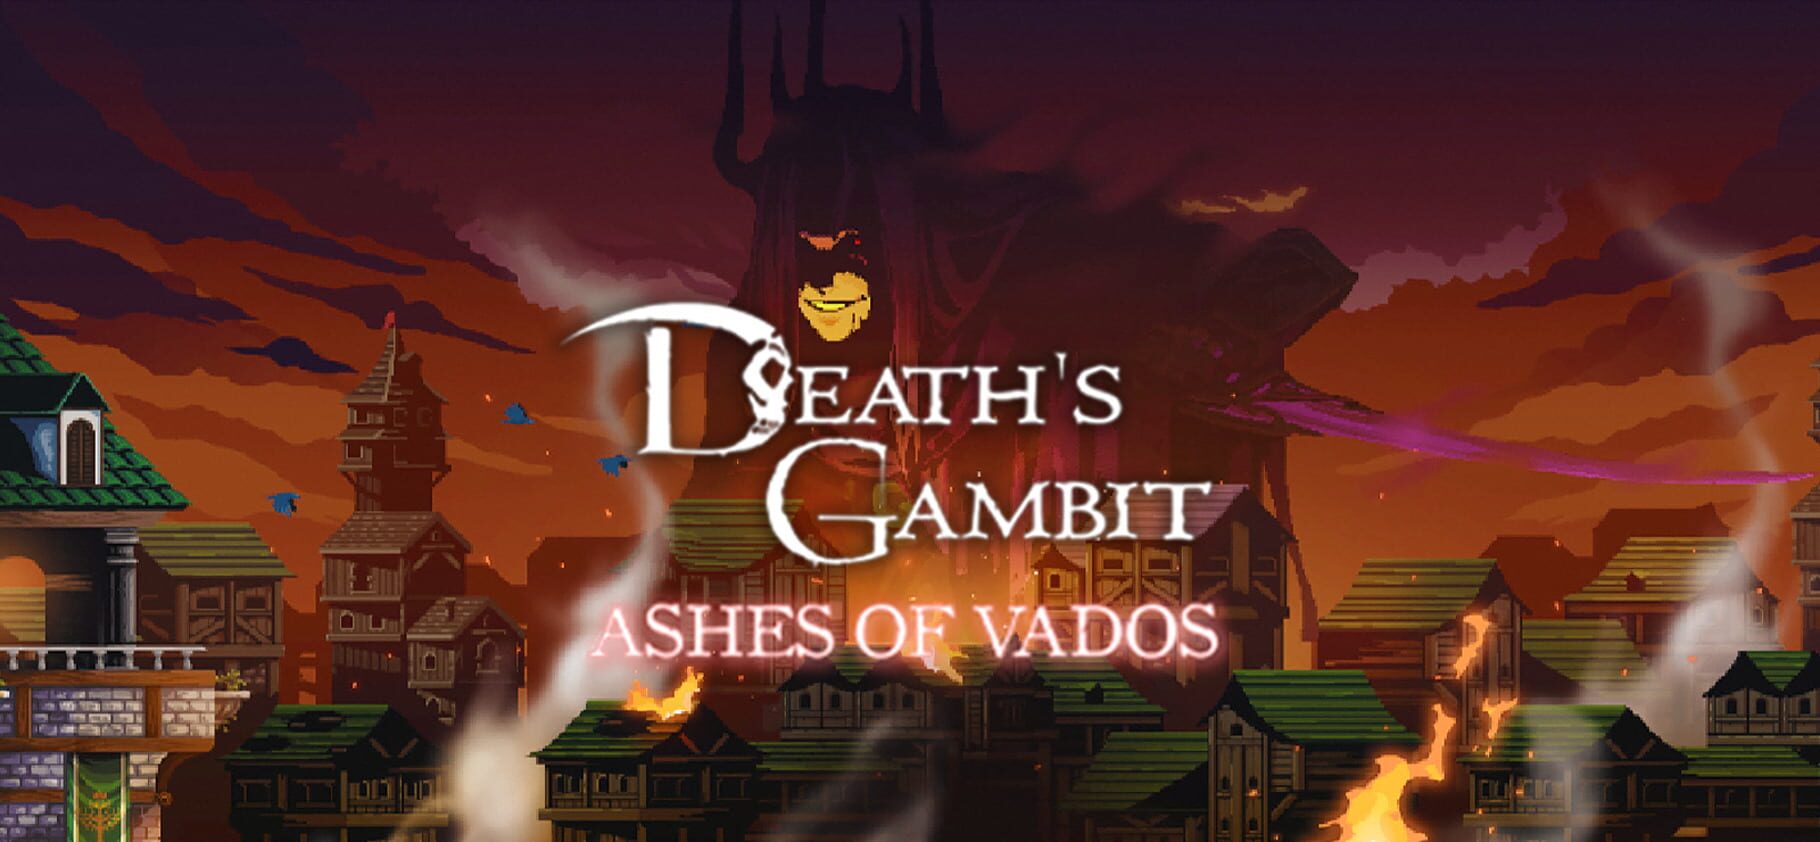 Death's Gambit: Afterlife - Ashes of Vados artwork